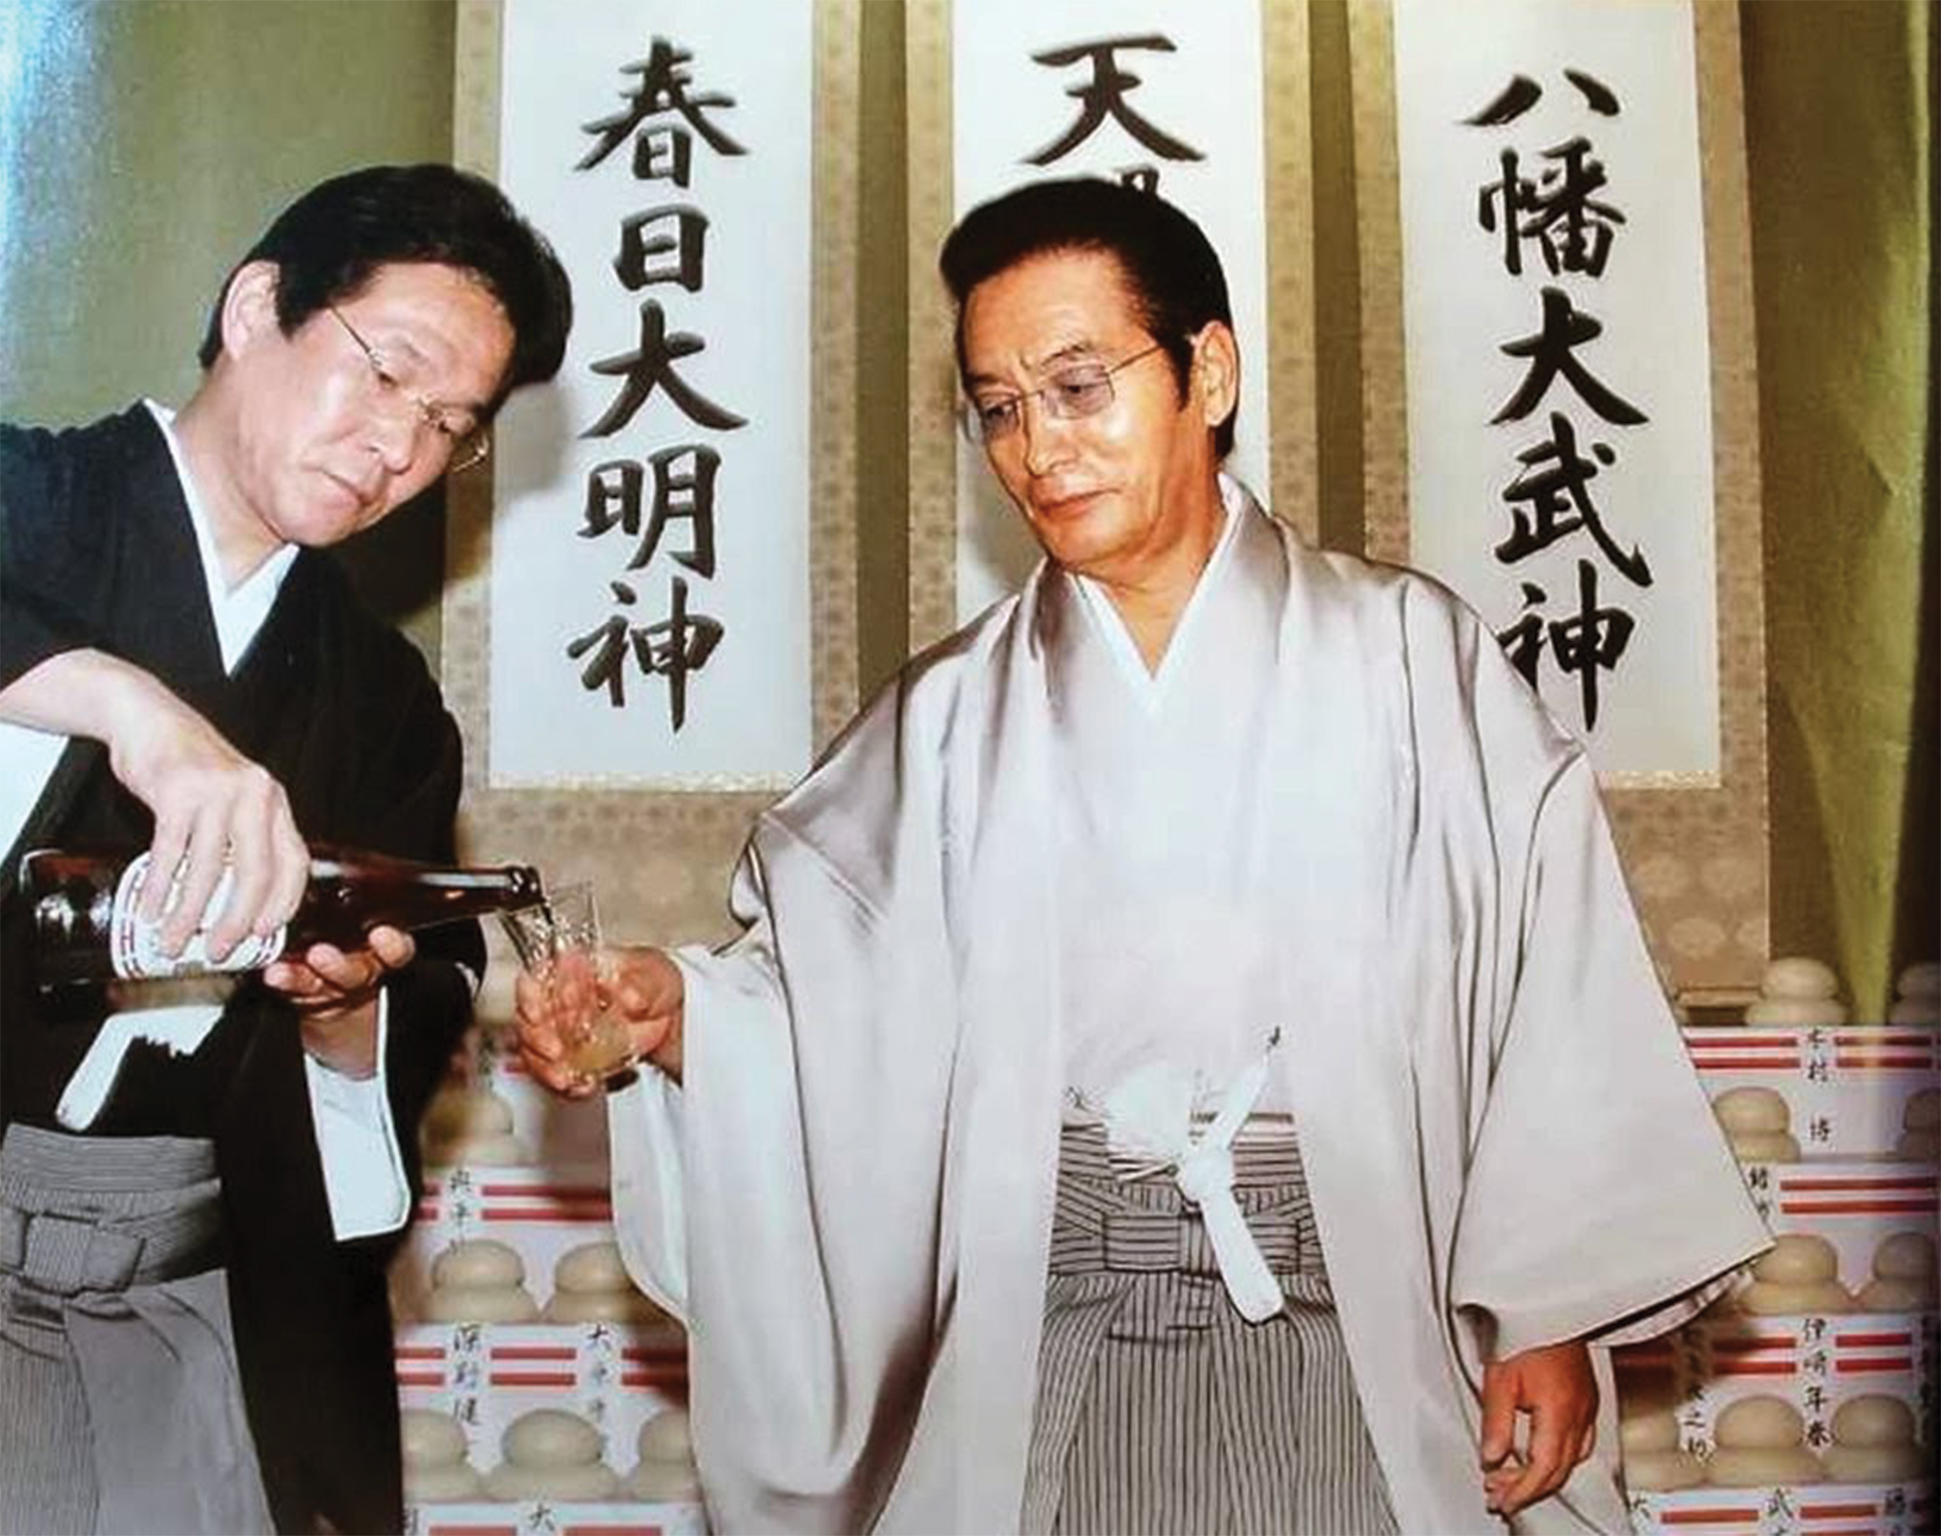 yakuza boss Satoru Nomura death sentence overturned